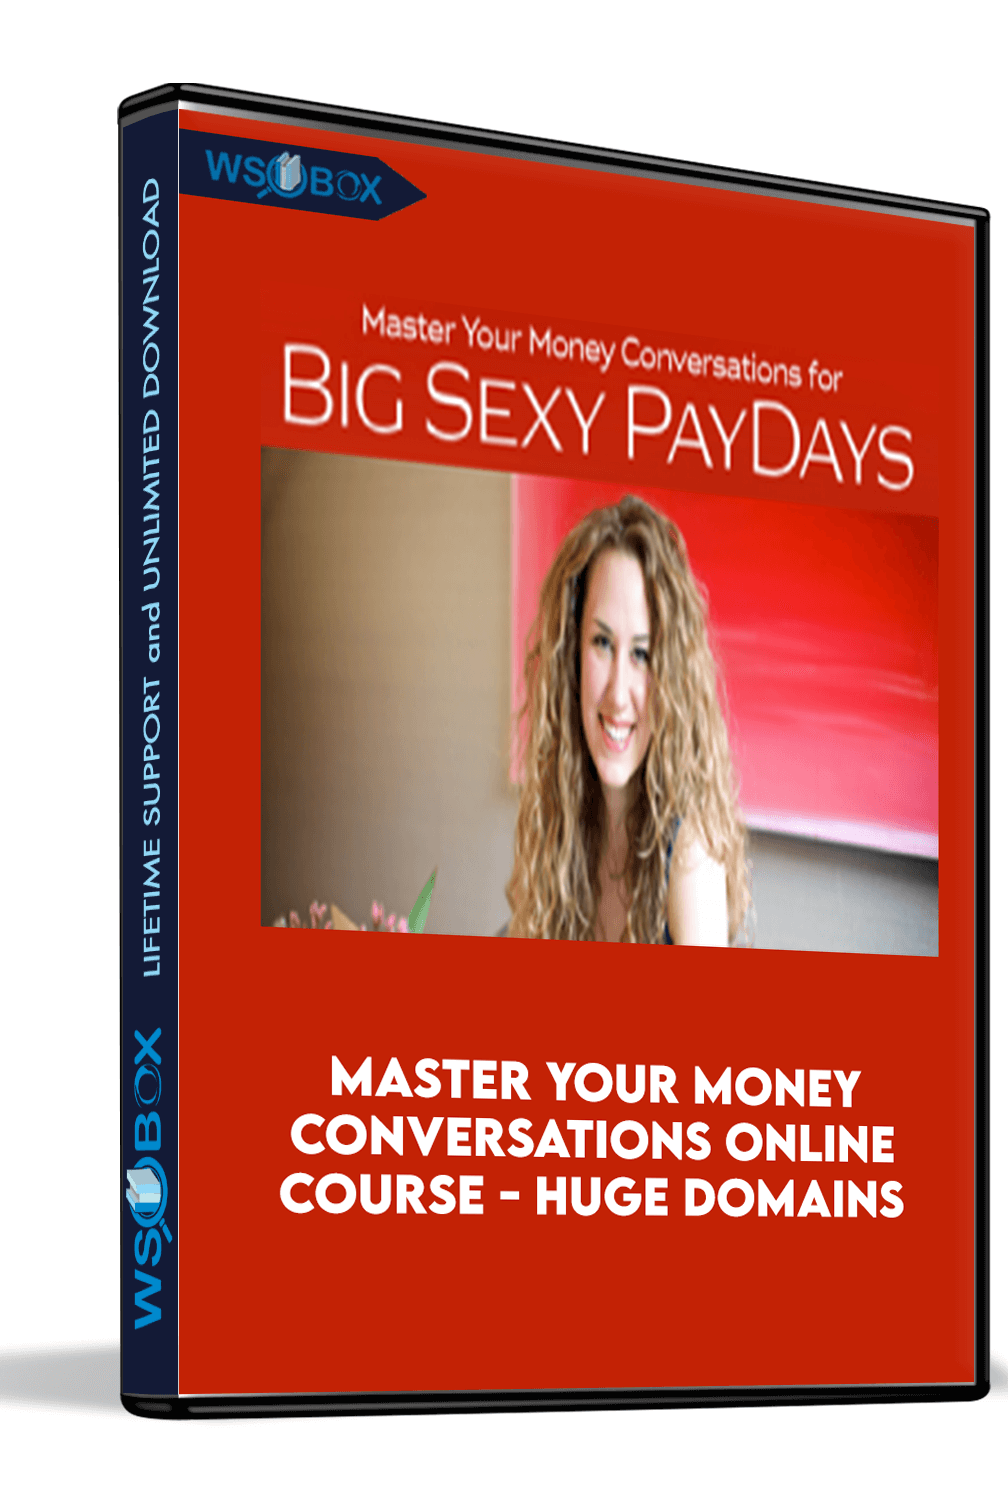 Master Your Money Conversations Online Course – Huge Domains